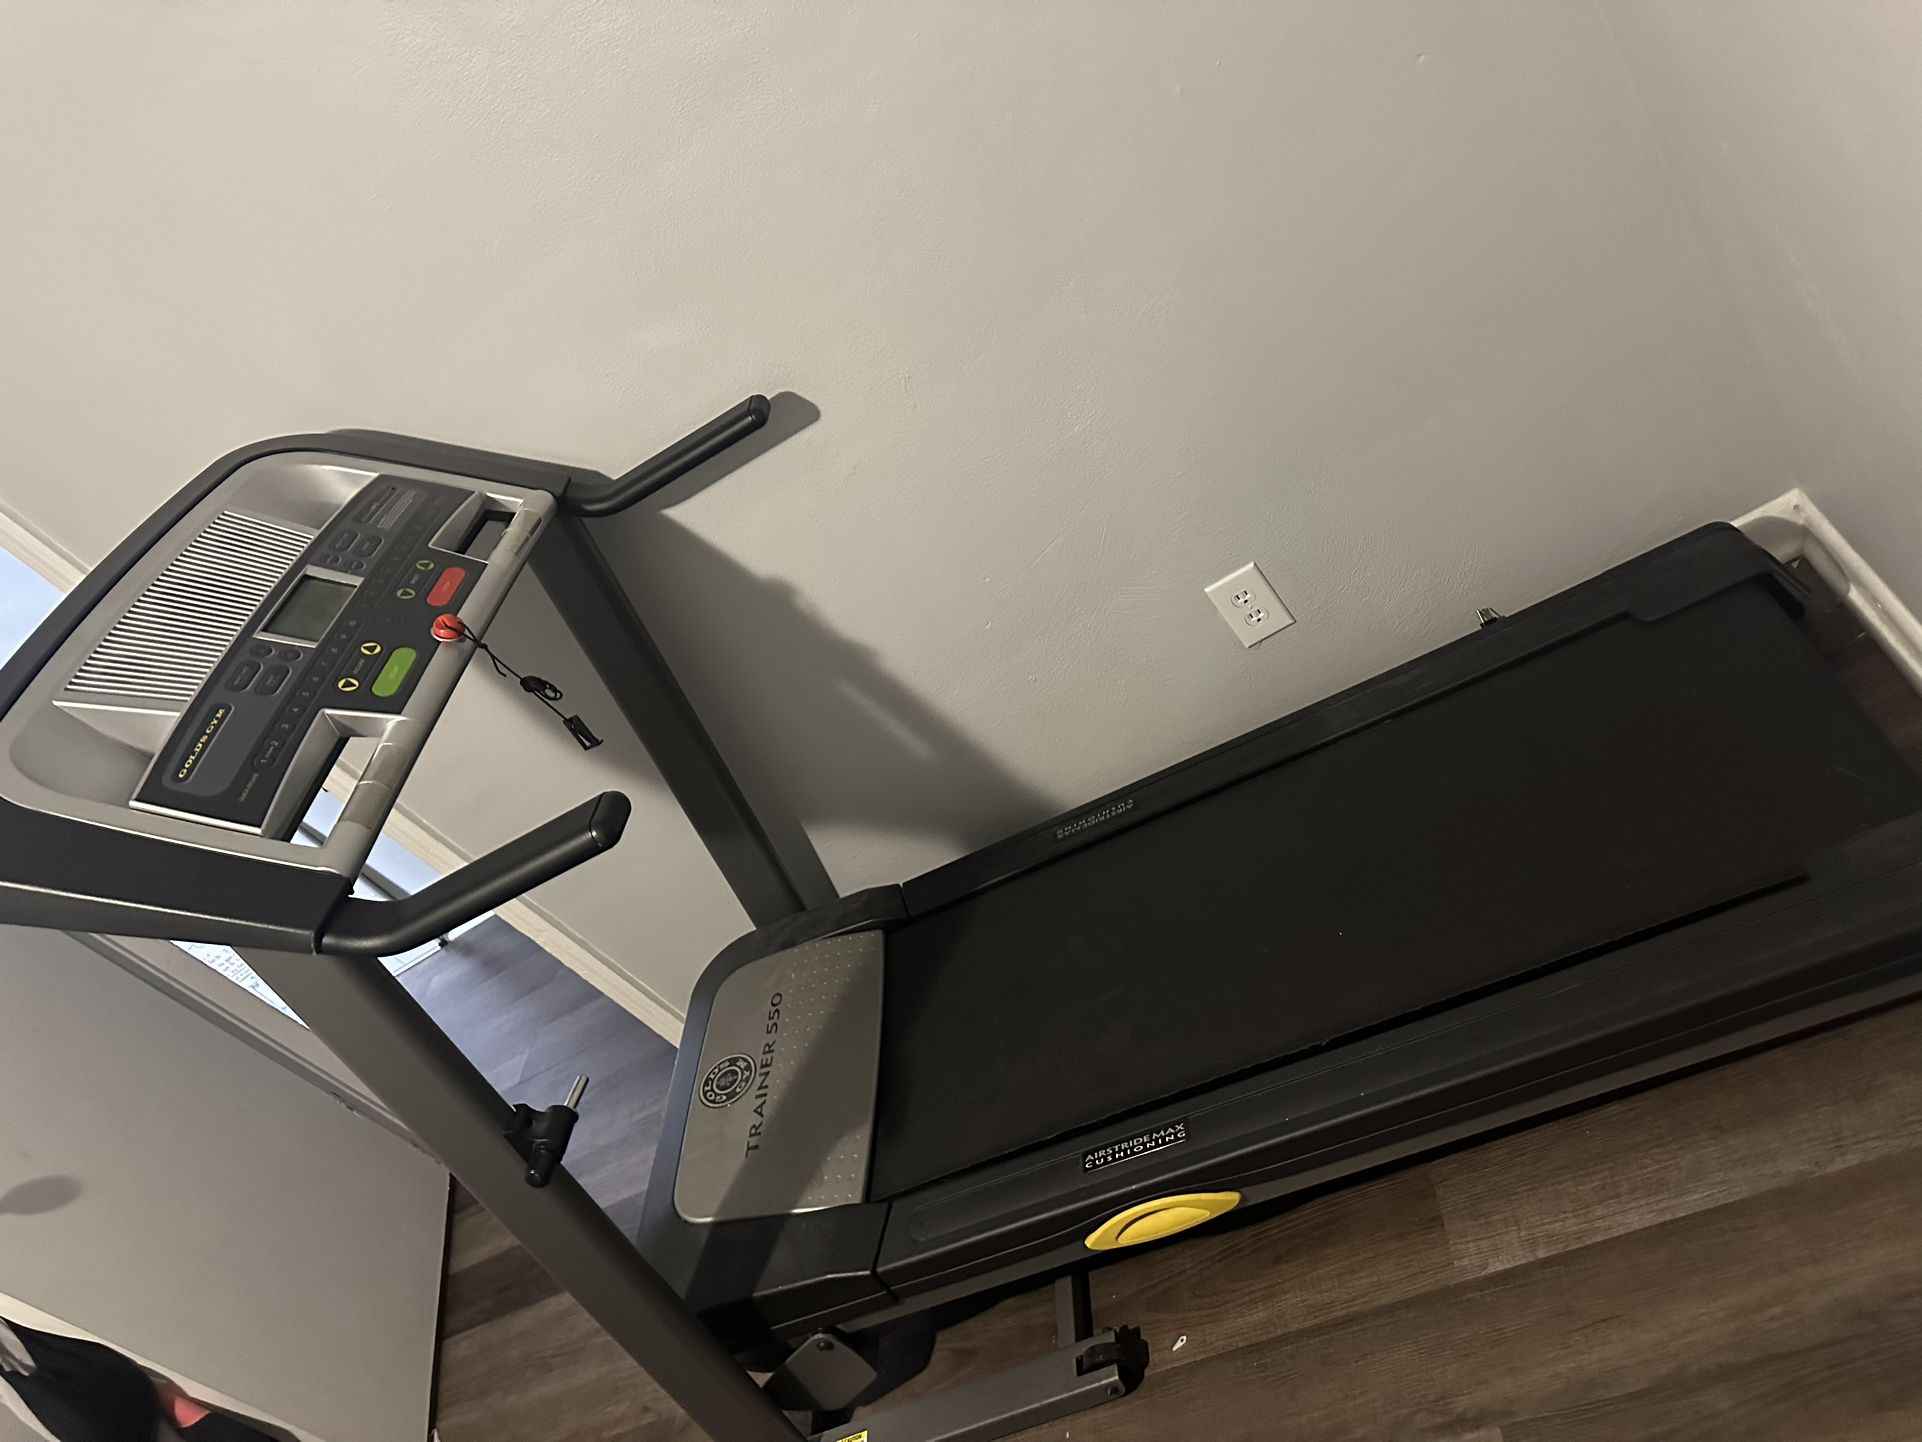 Golds Gym Treadmill 